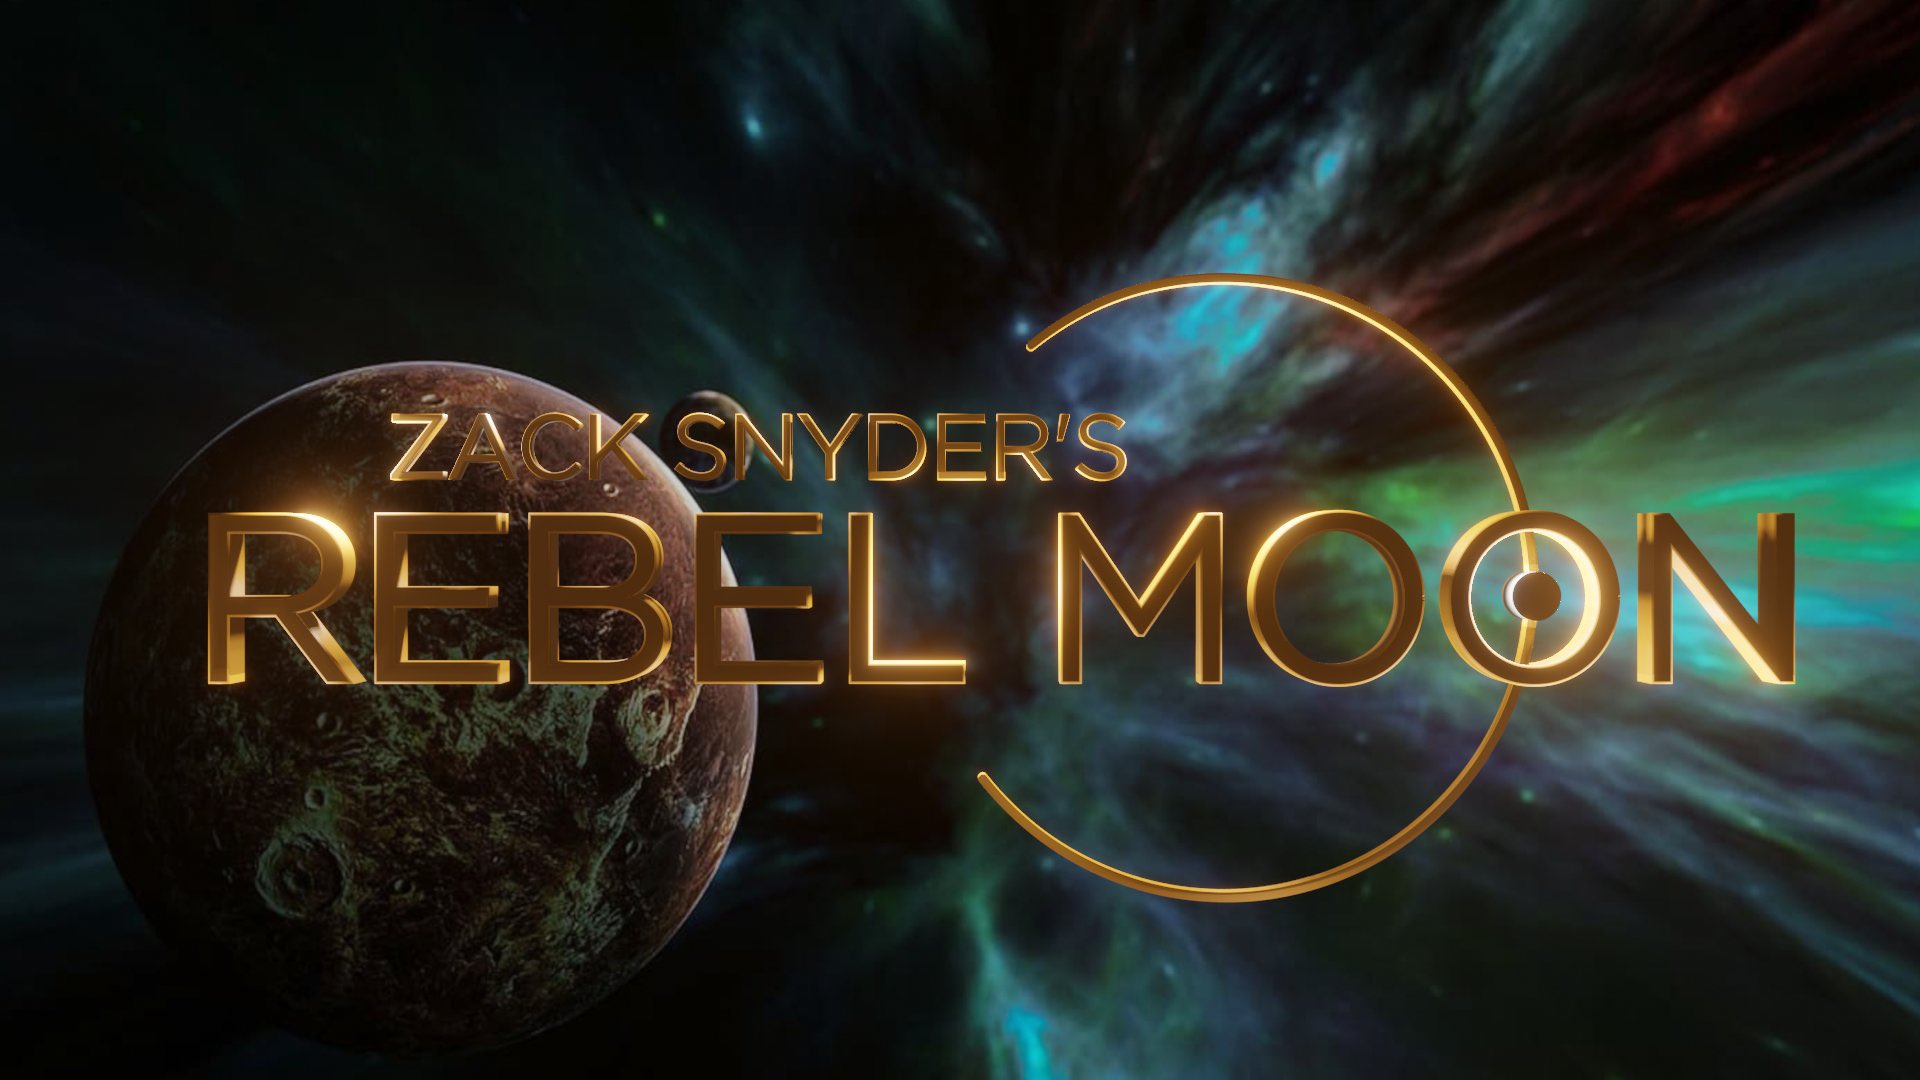 What is Rebel Moon? Zack Snyder Space Fantasy Release Date, Cast News -  Netflix Tudum